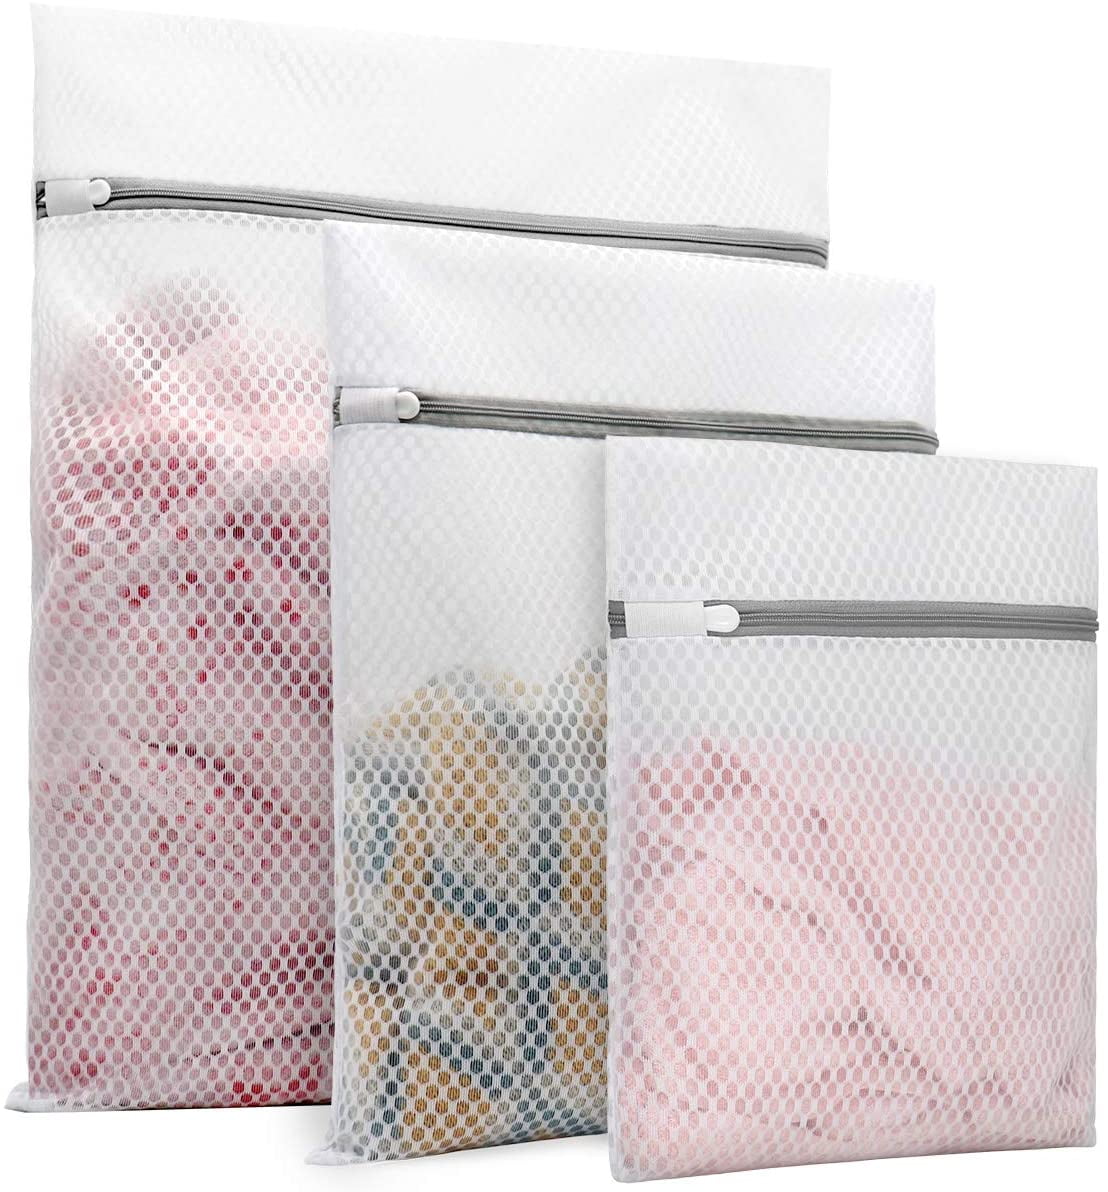 Heidi Klum Intimates Solutions Lingerie Mesh Laundry Bag for Delicates 15